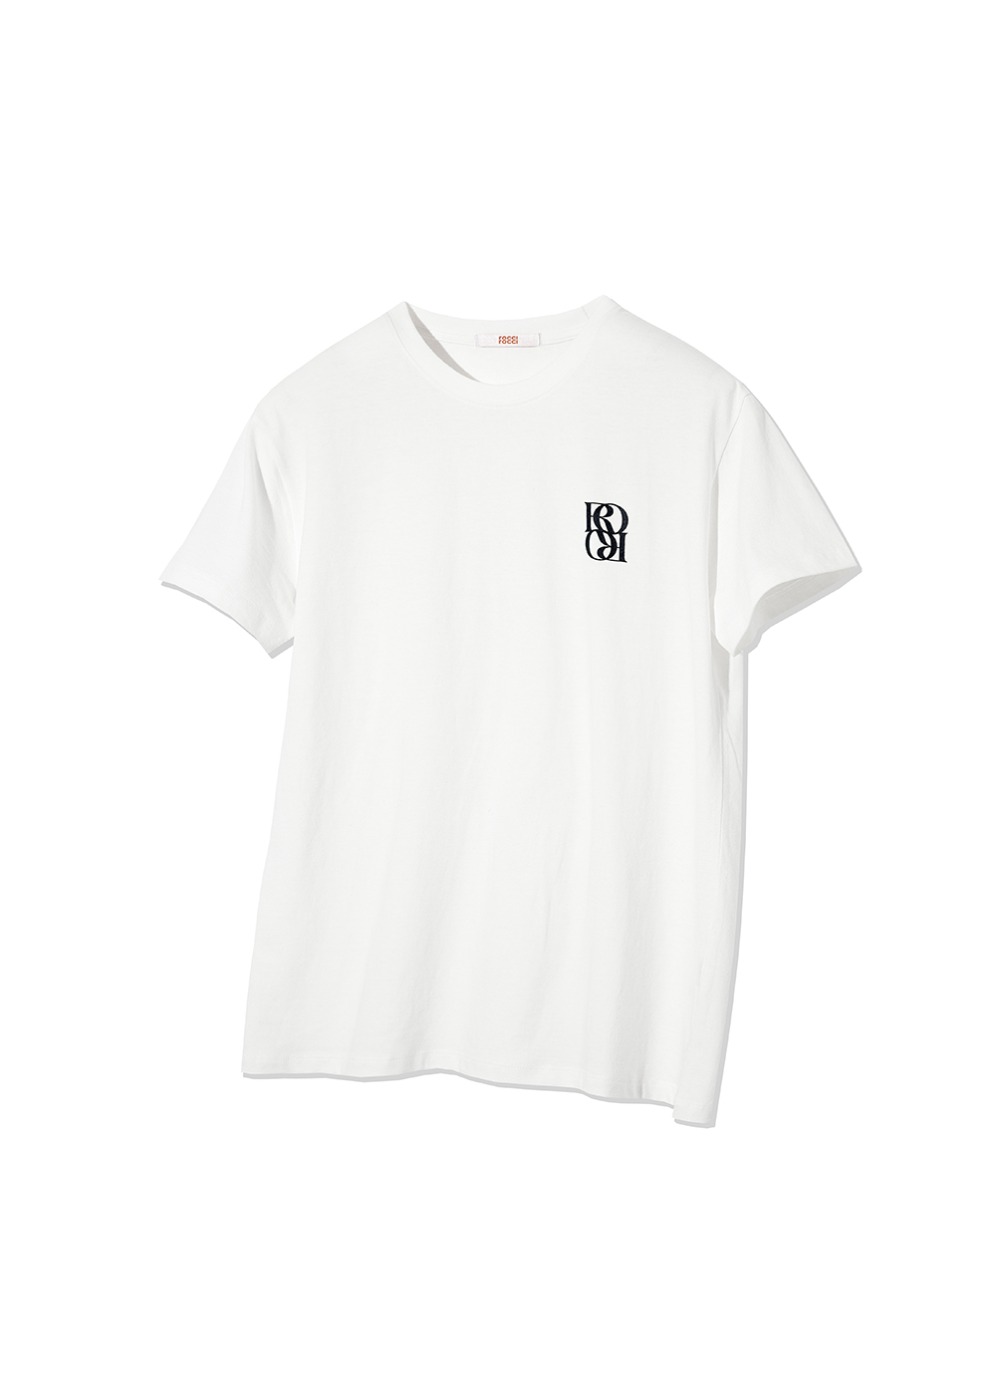 *Classic Symbol Regular T-shirt [WHITE]*Classic Symbol Regular T-shirt [WHITE]자체브랜드